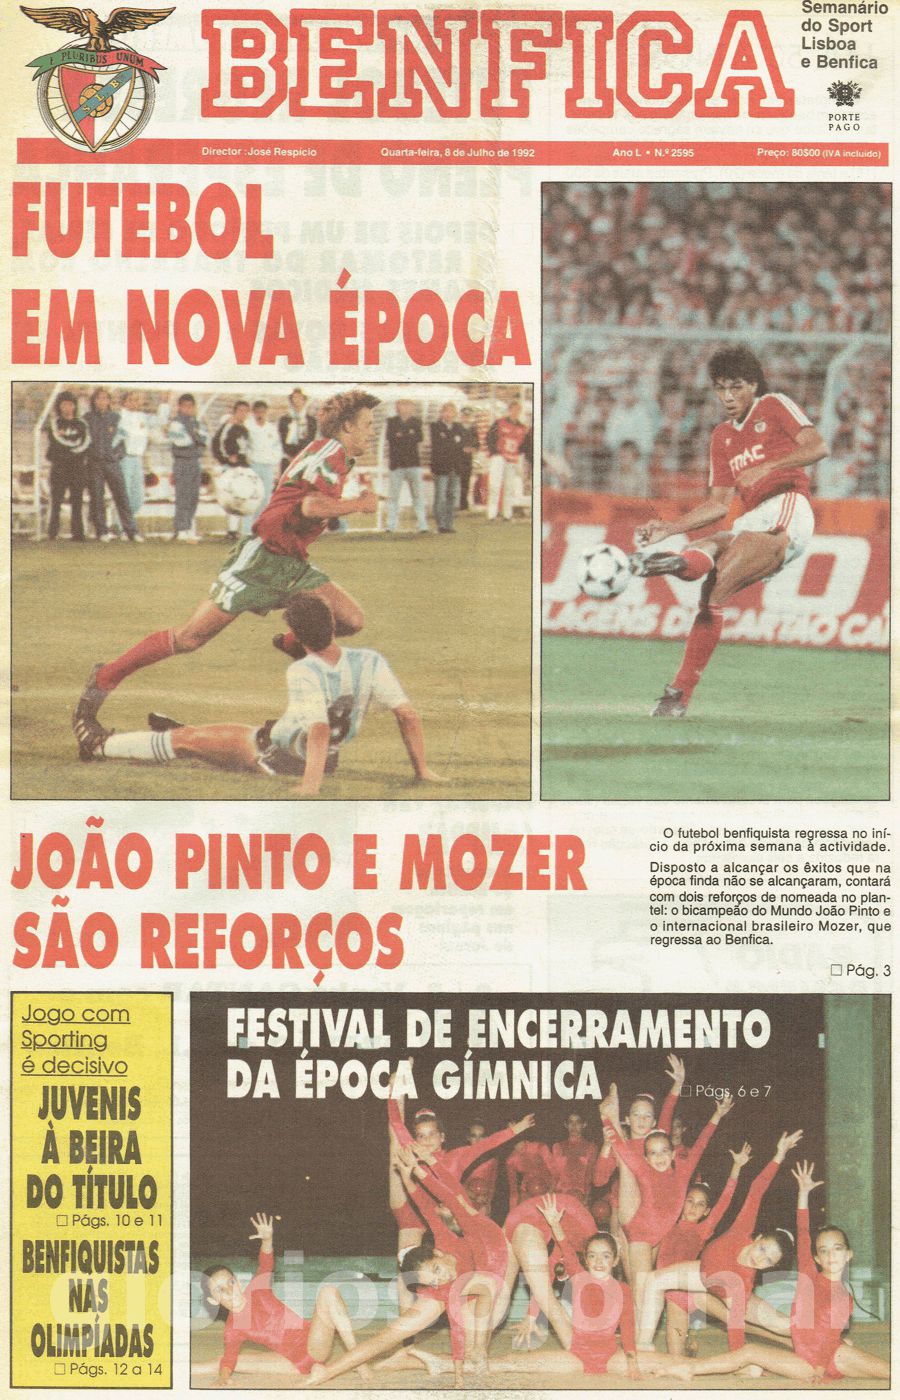 jornal o benfica 2595 1992-07-08